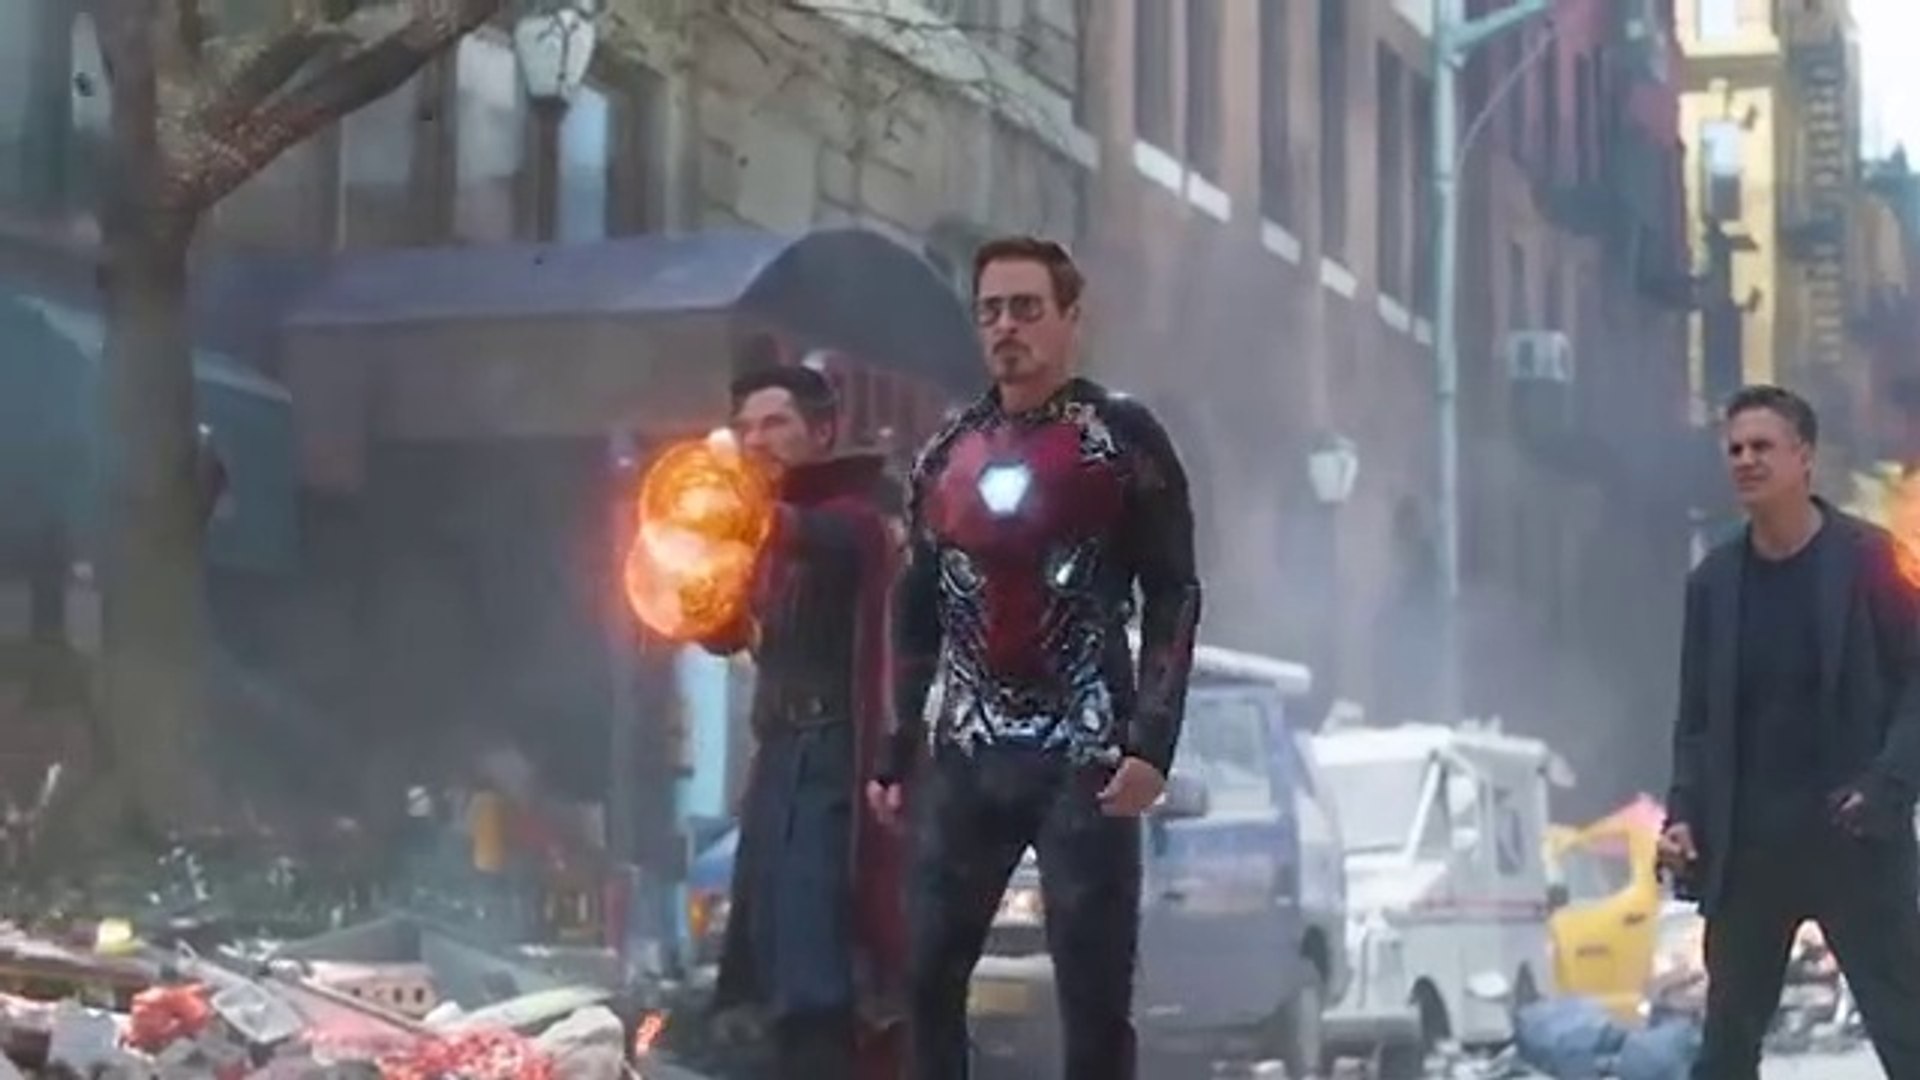 Iron_Man_Suit_Up_Scene_(Hindi)_-_Avengers_Infinity_War_Movie_Clip_HD(360p)  - video Dailymotion